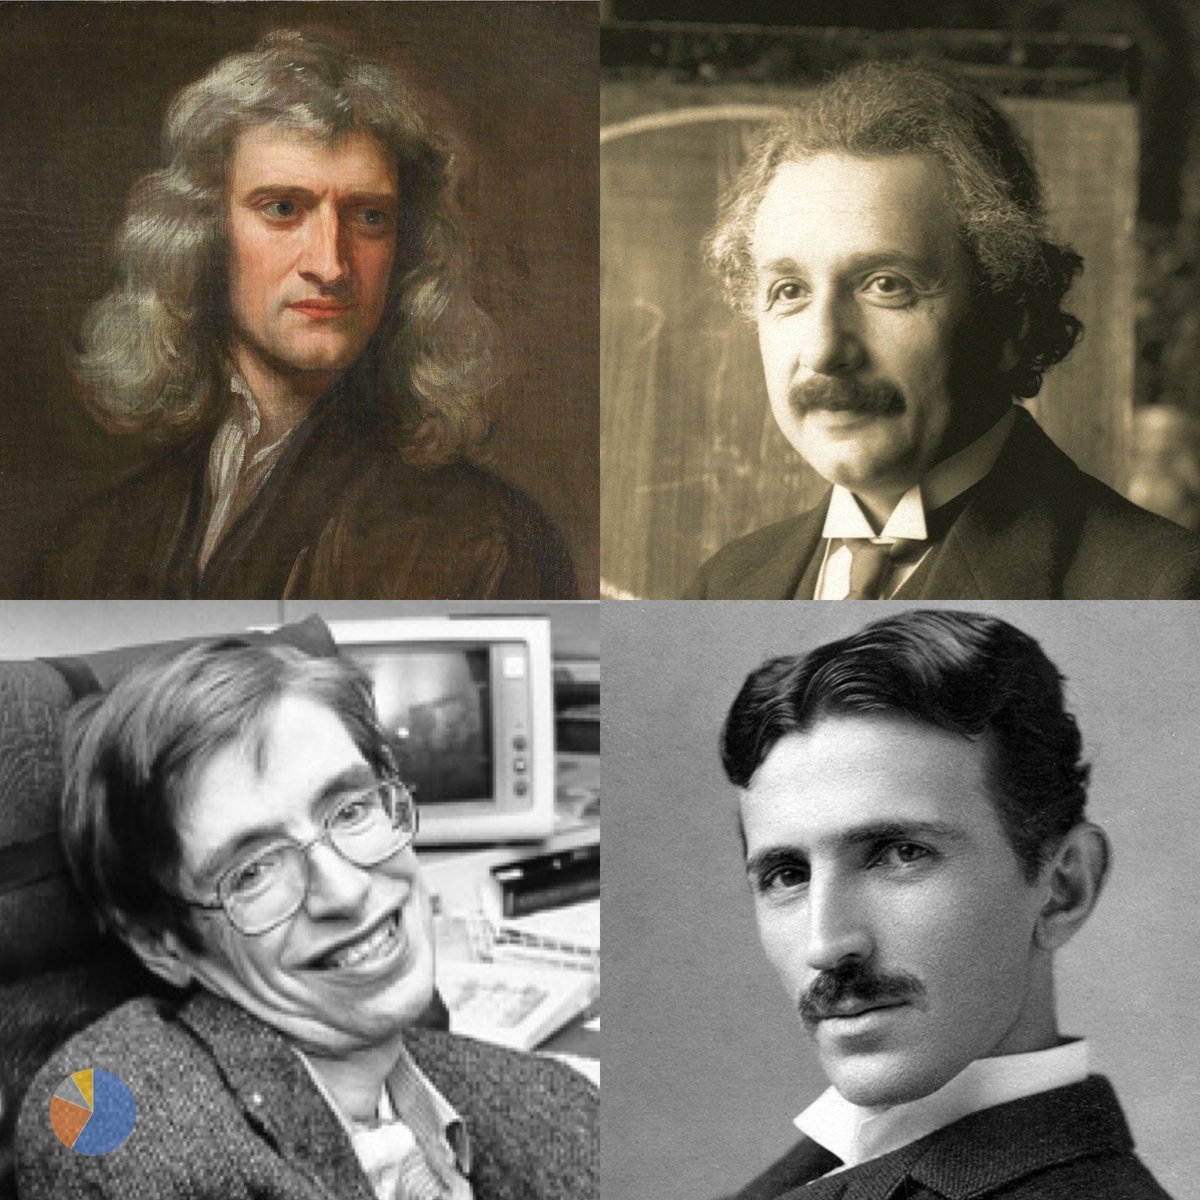 Who had the largest impact on human history? 1. Isaac Newton 2. Albert Einstein 3. Stephen Hawking 4. Nikola Tesla